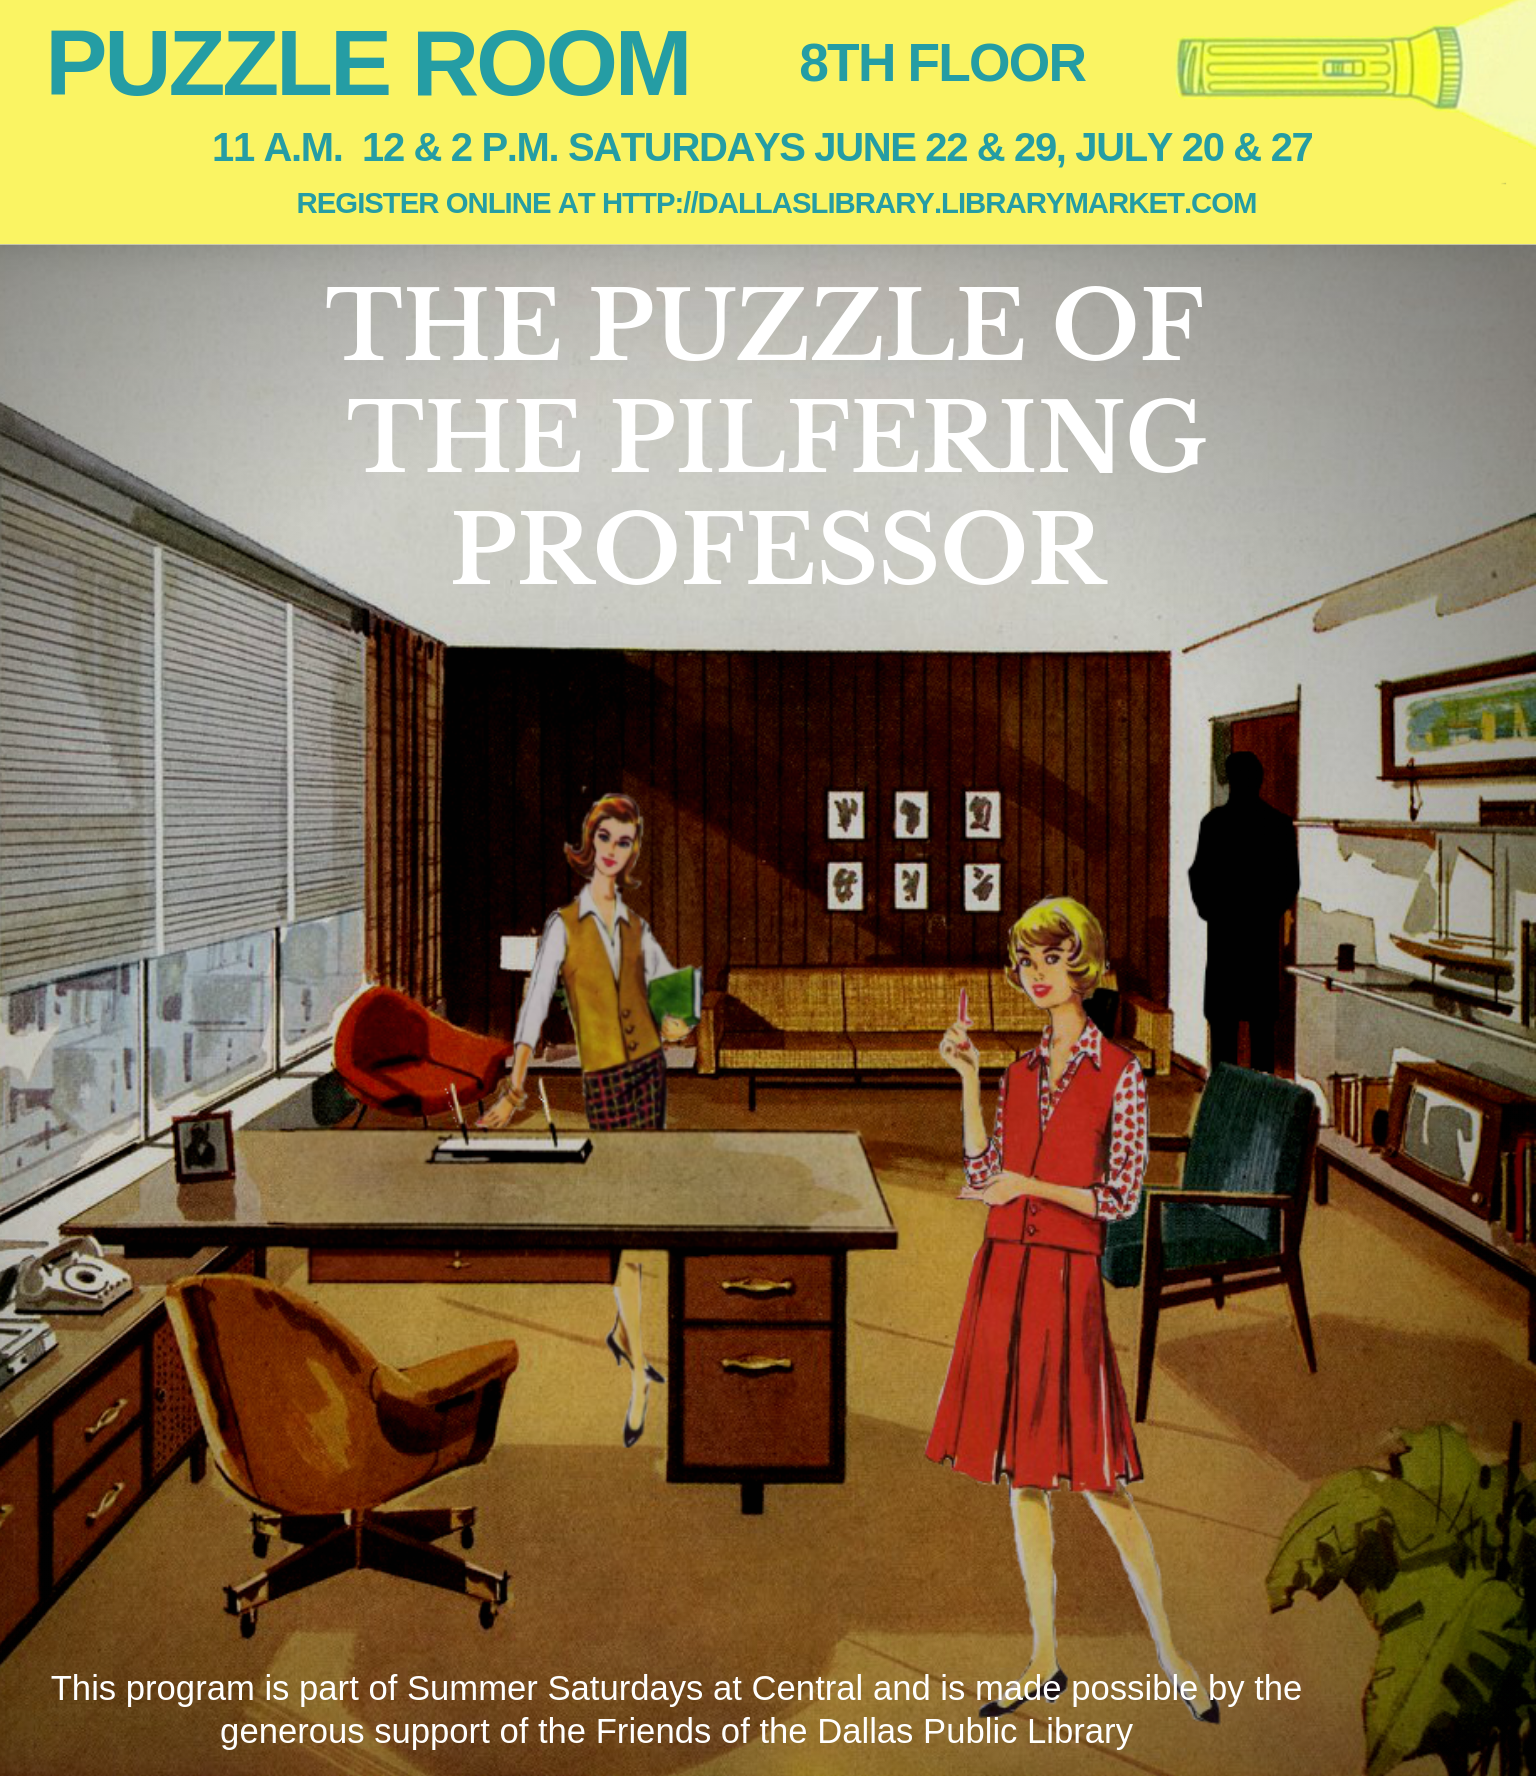 The Puzzle of the Pilfering Professor